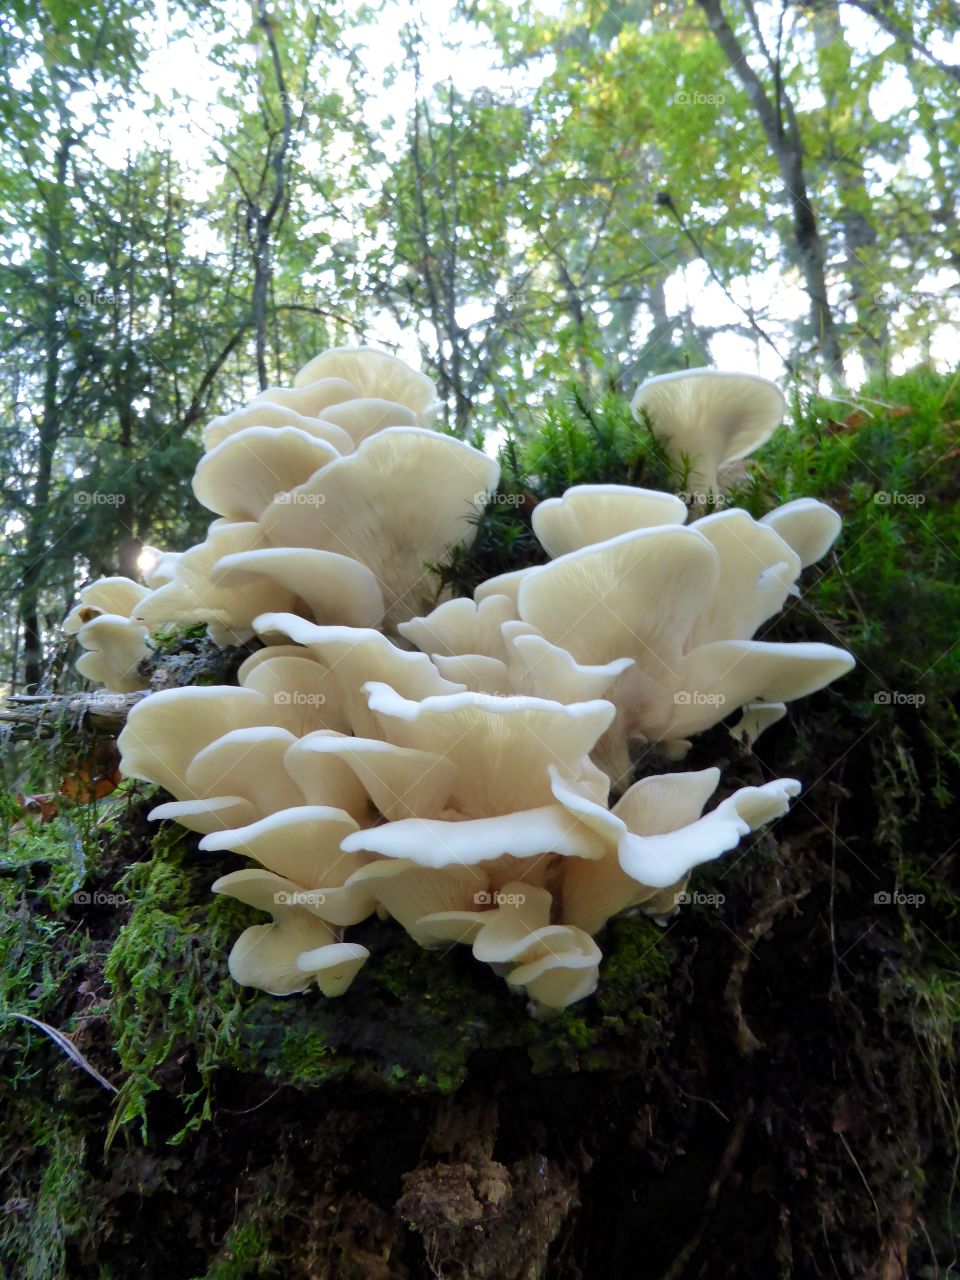 White mushrooms grow on stump